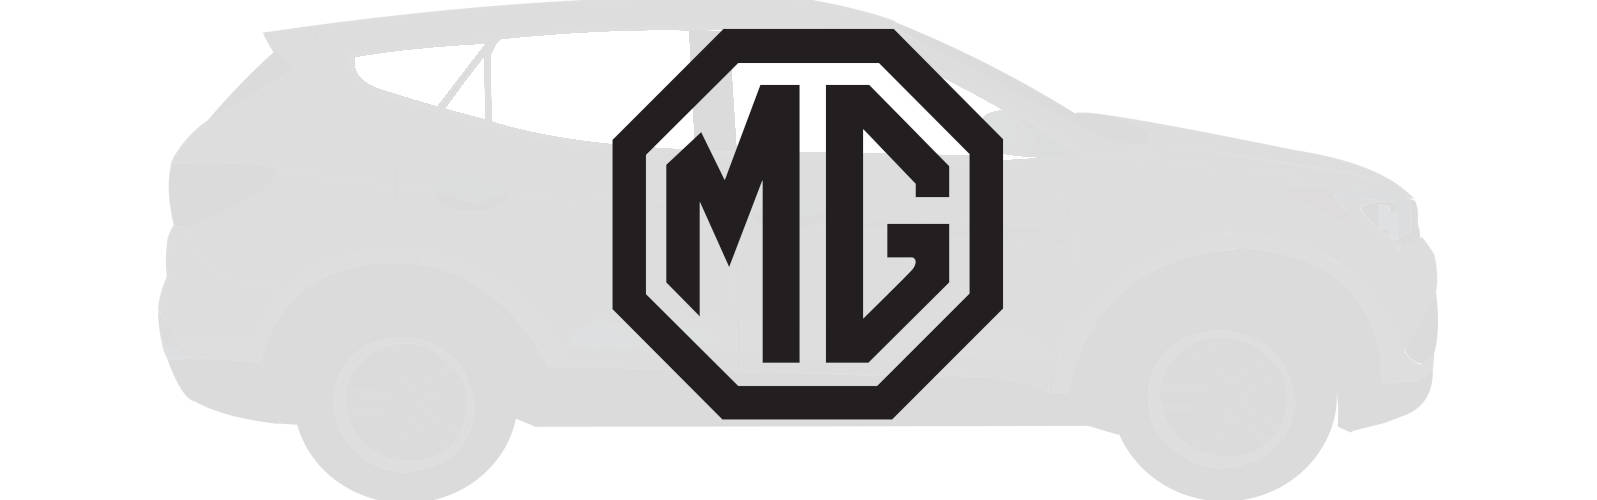 MG SUV Modelle